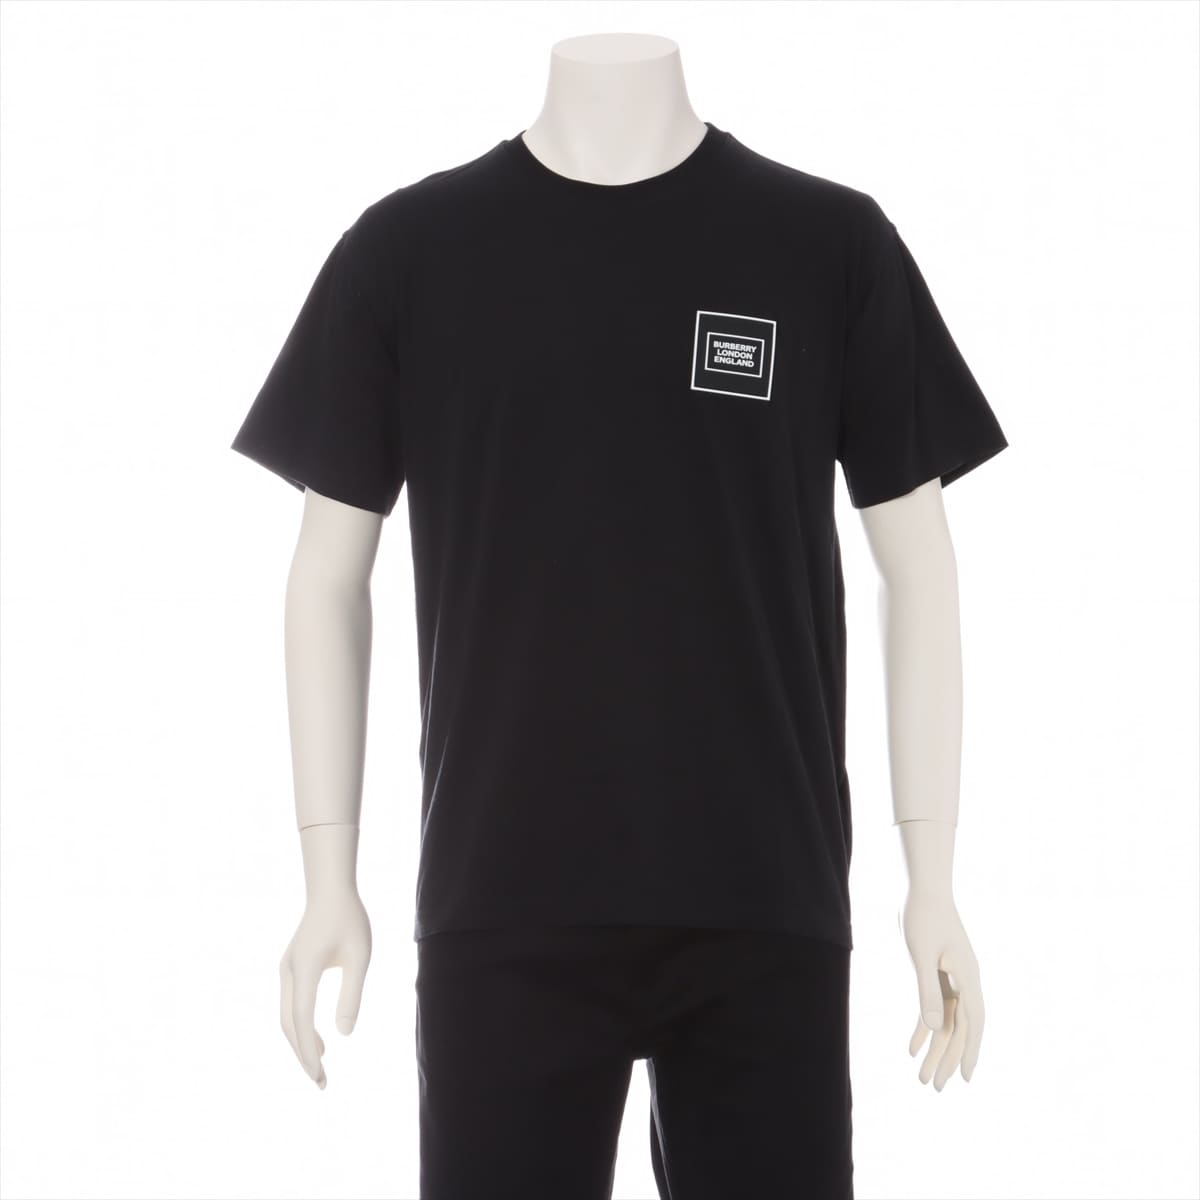 Burberry Cotton T-shirt XS Men's Black  logo plate